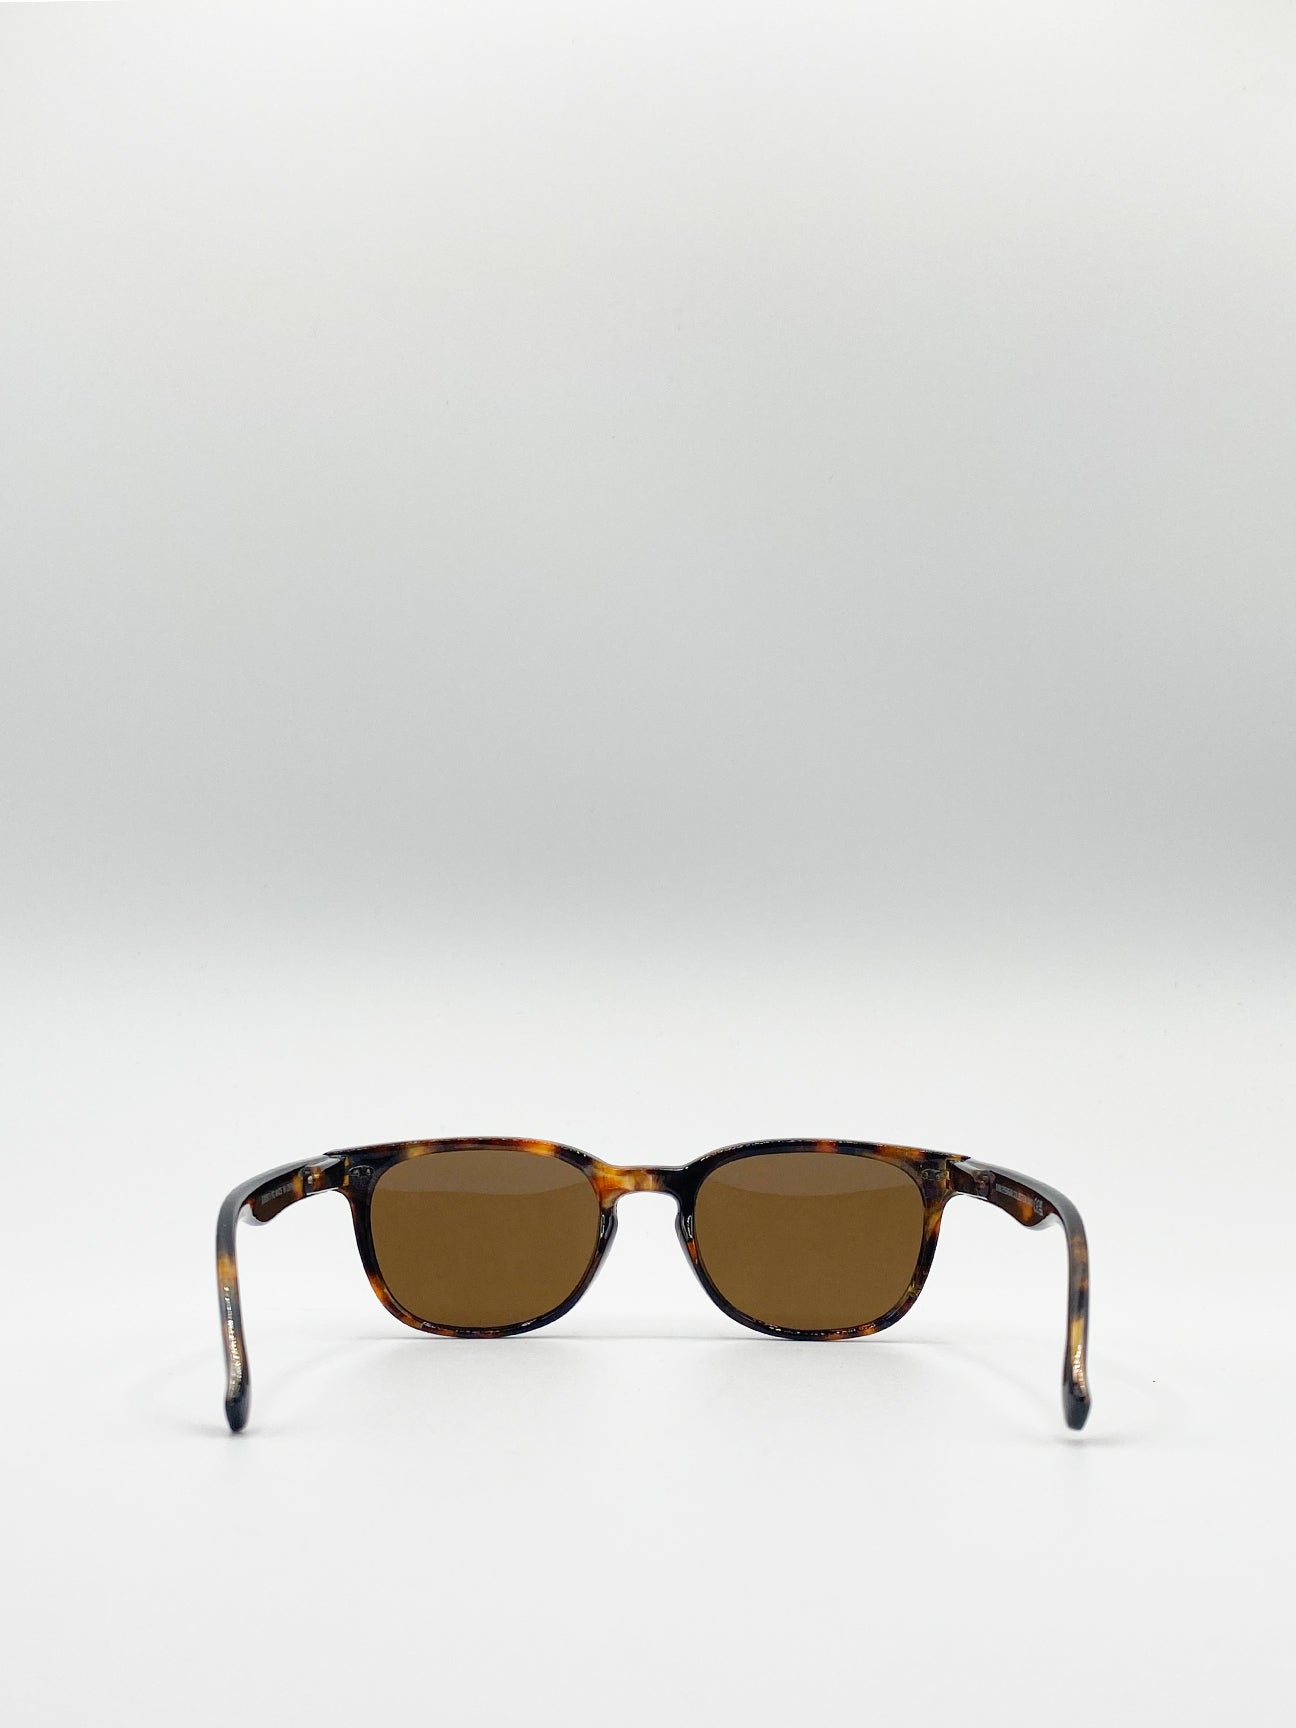 Tortoiseshell Classic Preppy Square Sunglasses With Key Hole Nosebridge